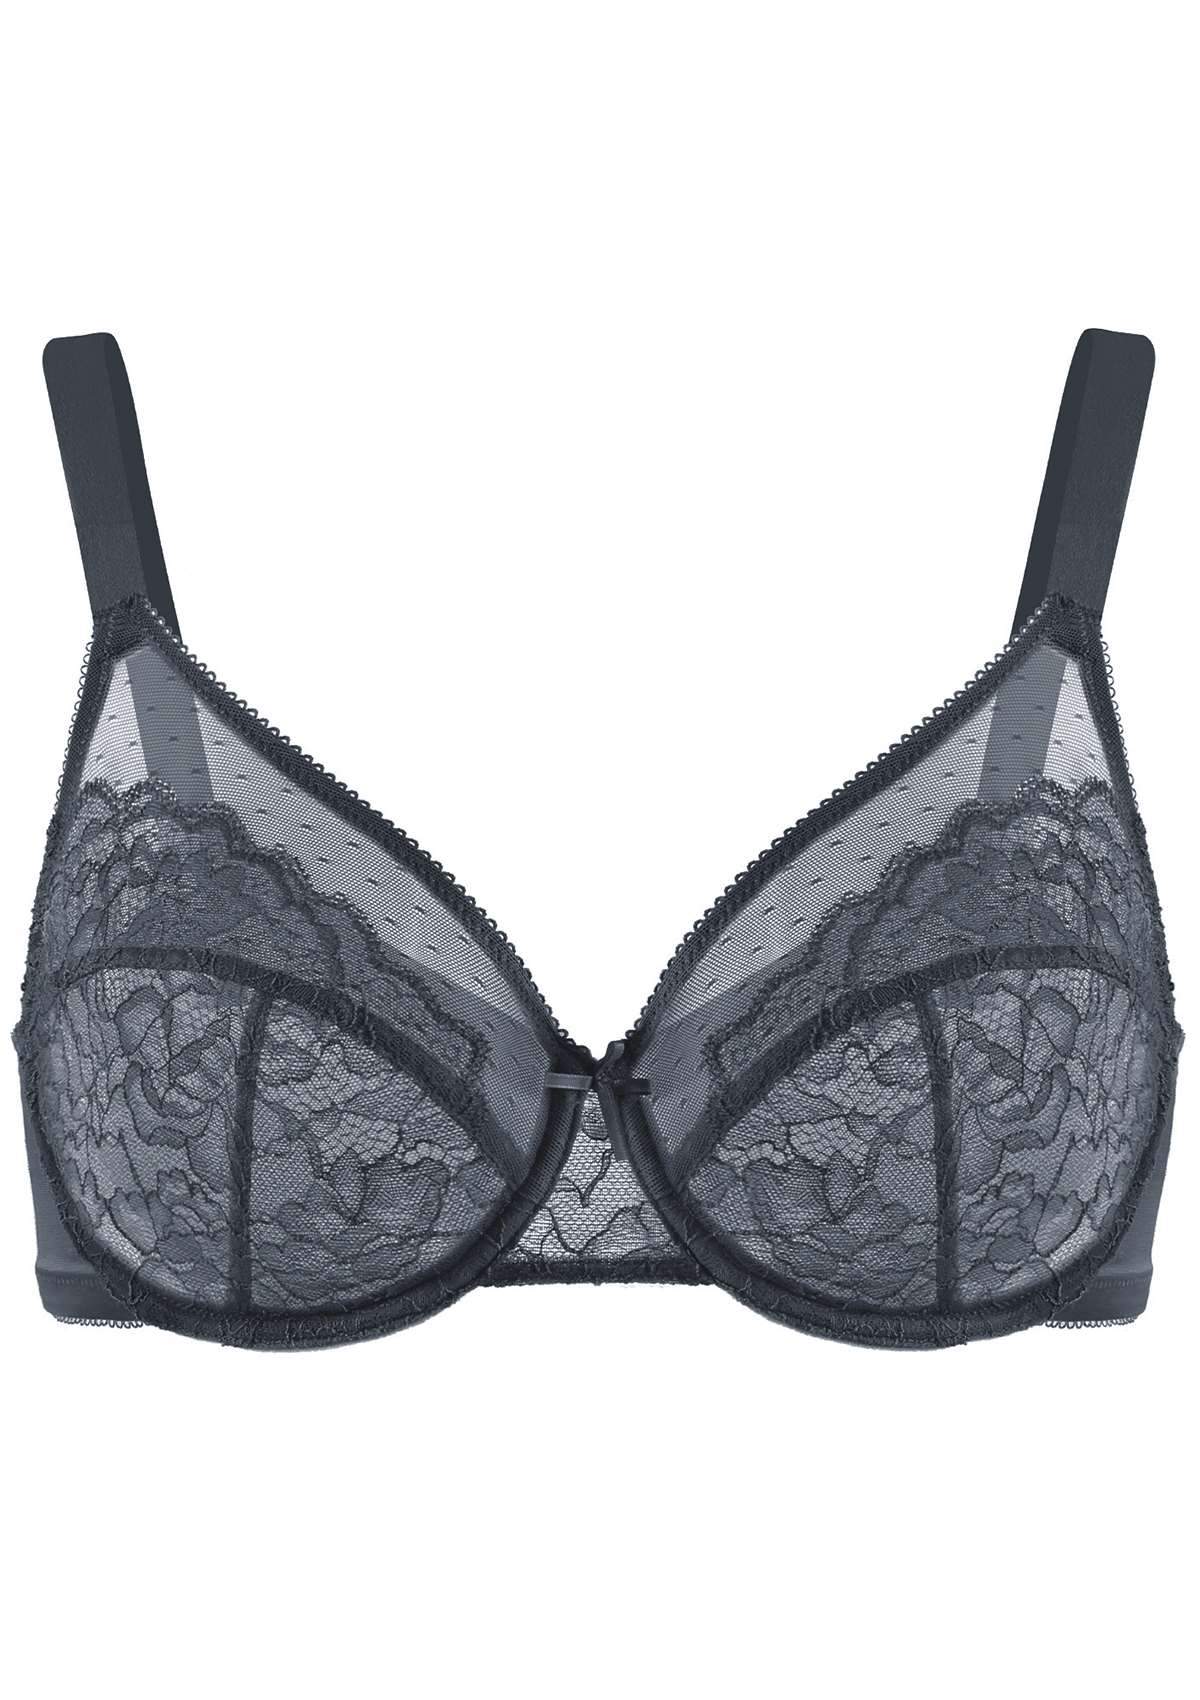 HSIA Enchante Matching Bra And Underwear Sets: Uplift Big Boobs Bra - Dark Gray / 34 / C